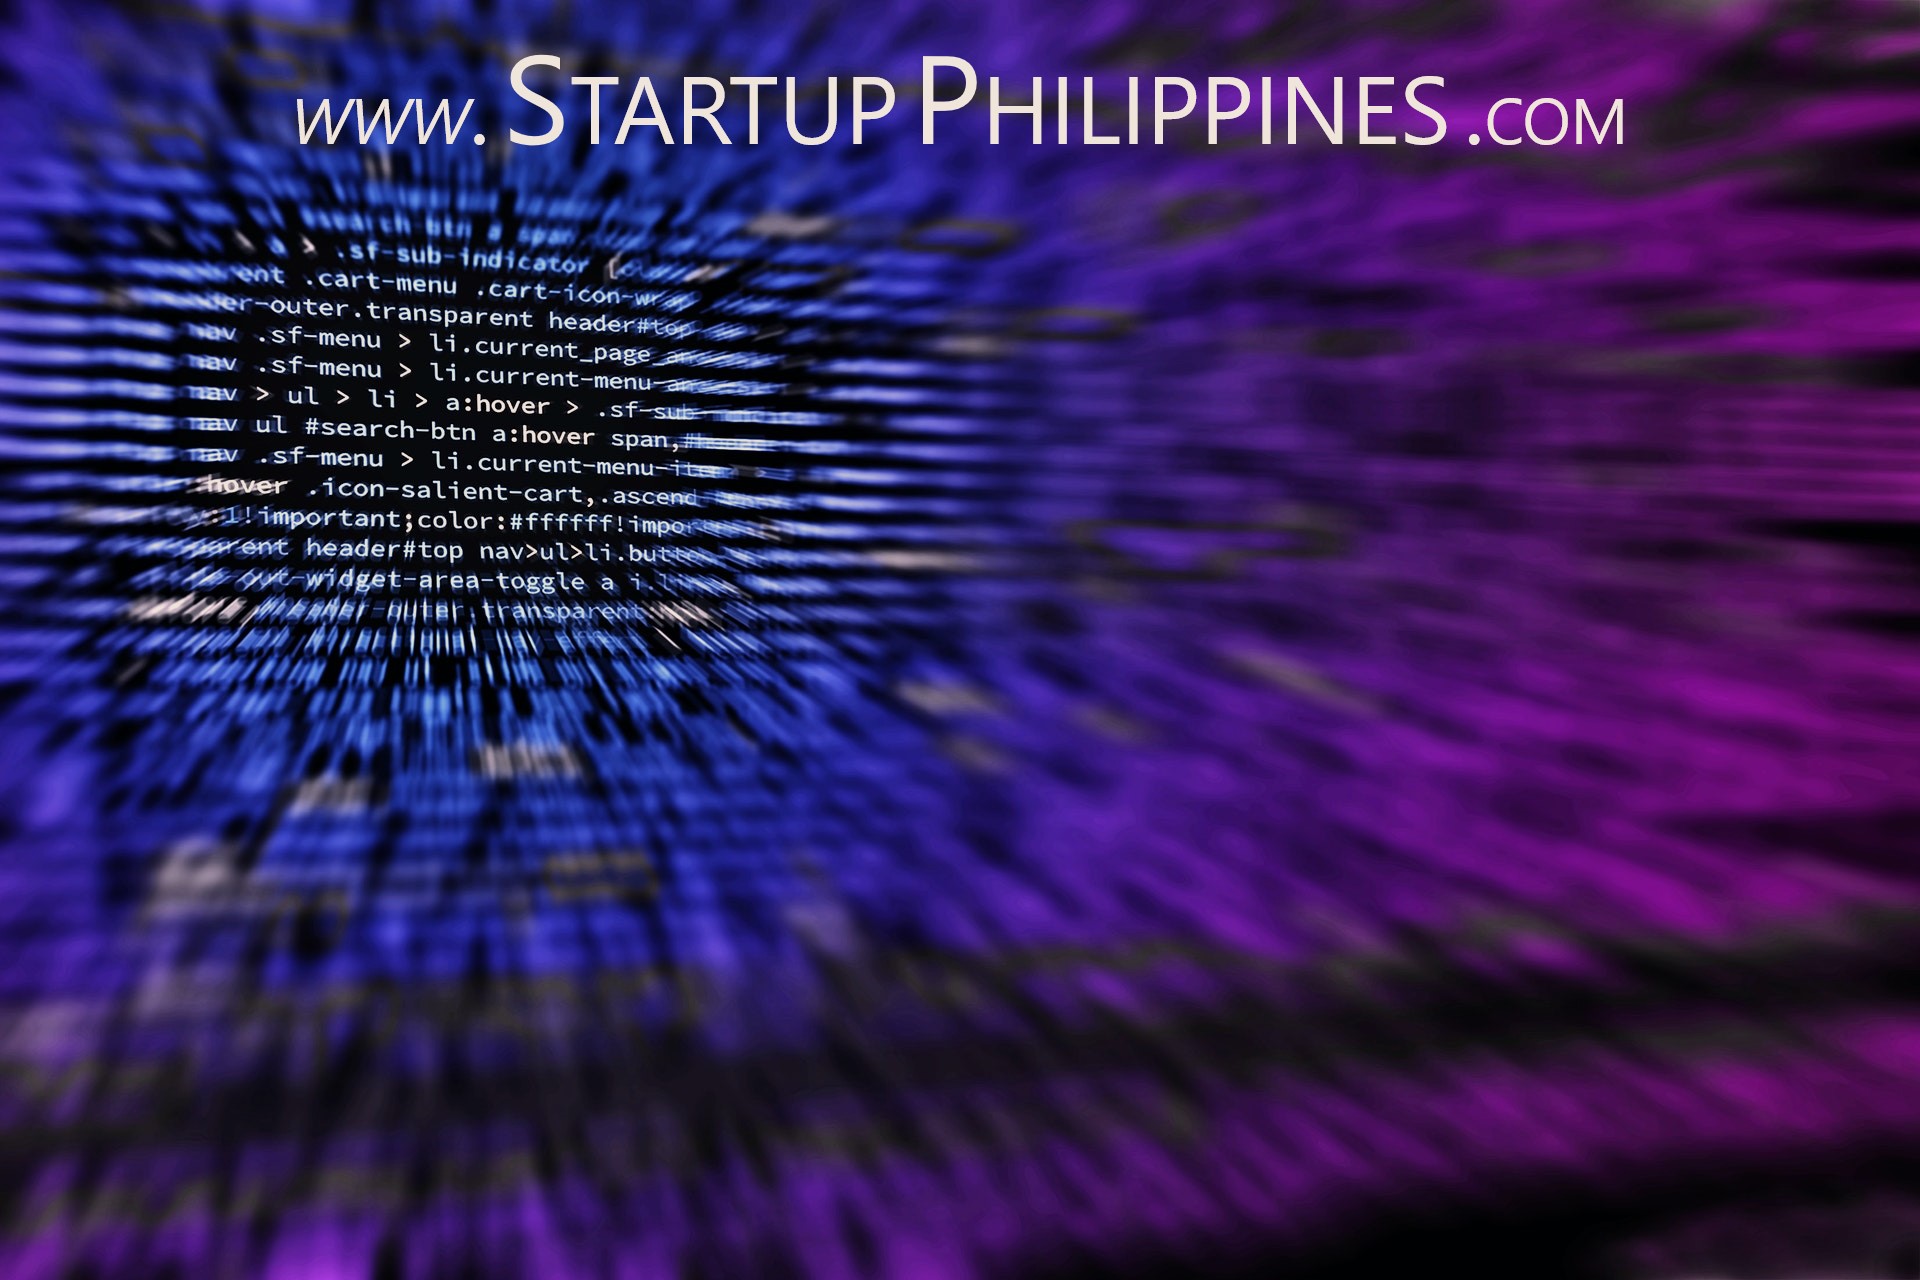 https://www.startupphilippines.com/000001a/pic/startup+b03+startup+philippines.jpg